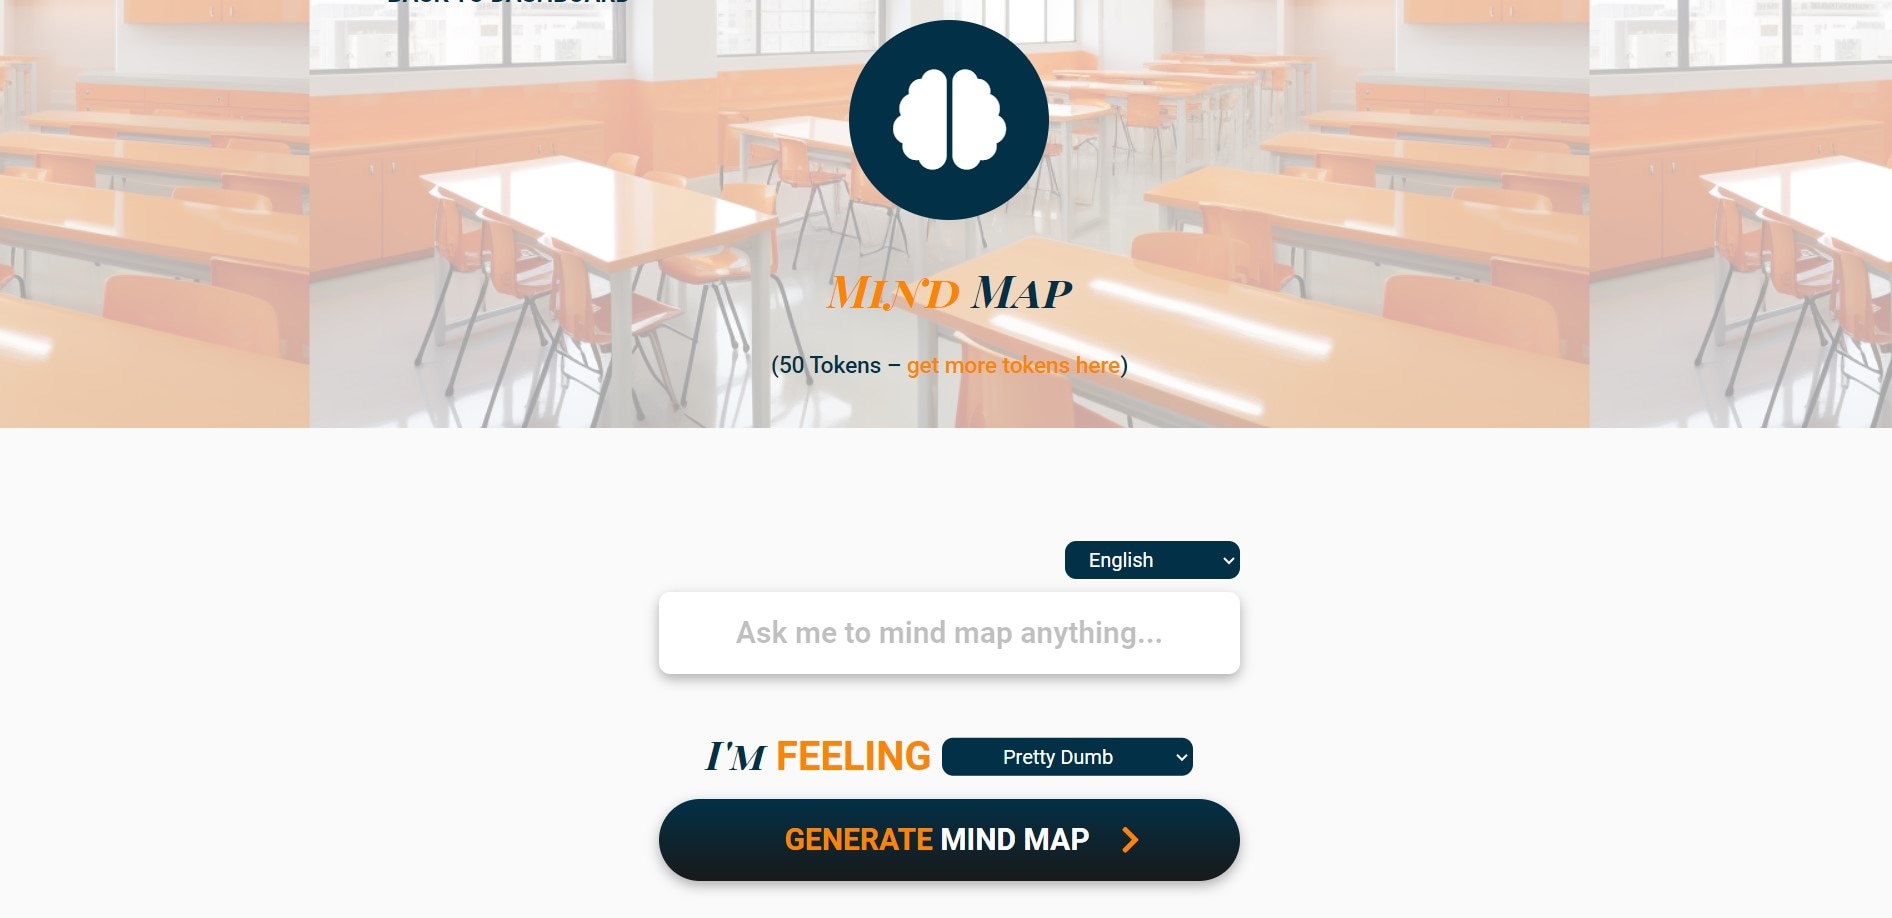 interface do site do mapa mental eli5 ai